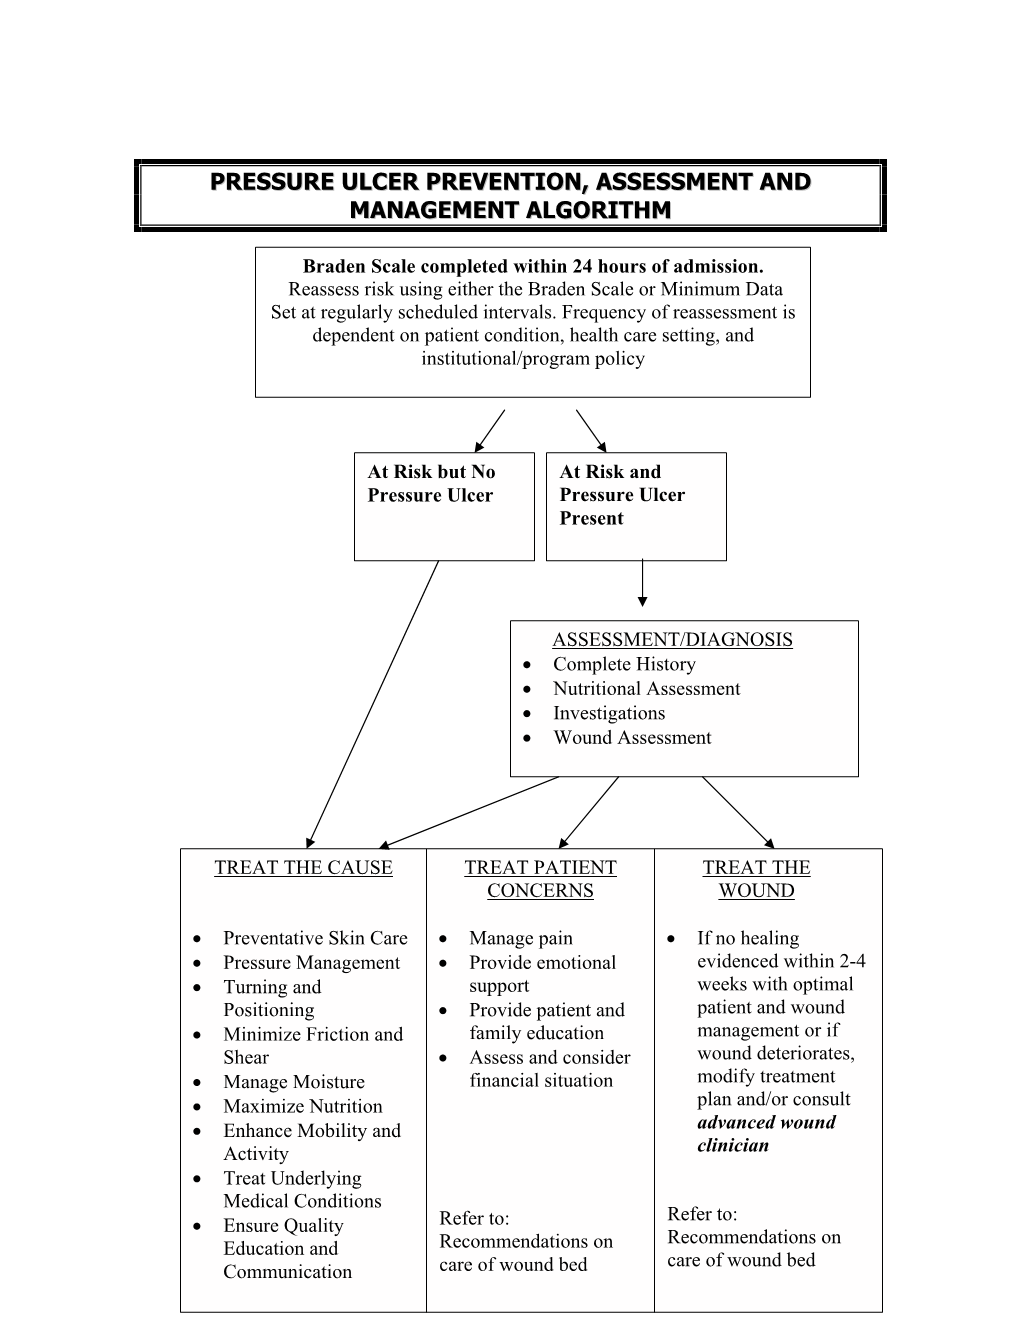 Pressure Ulcer Prevention, Assessment and Management Algorithm